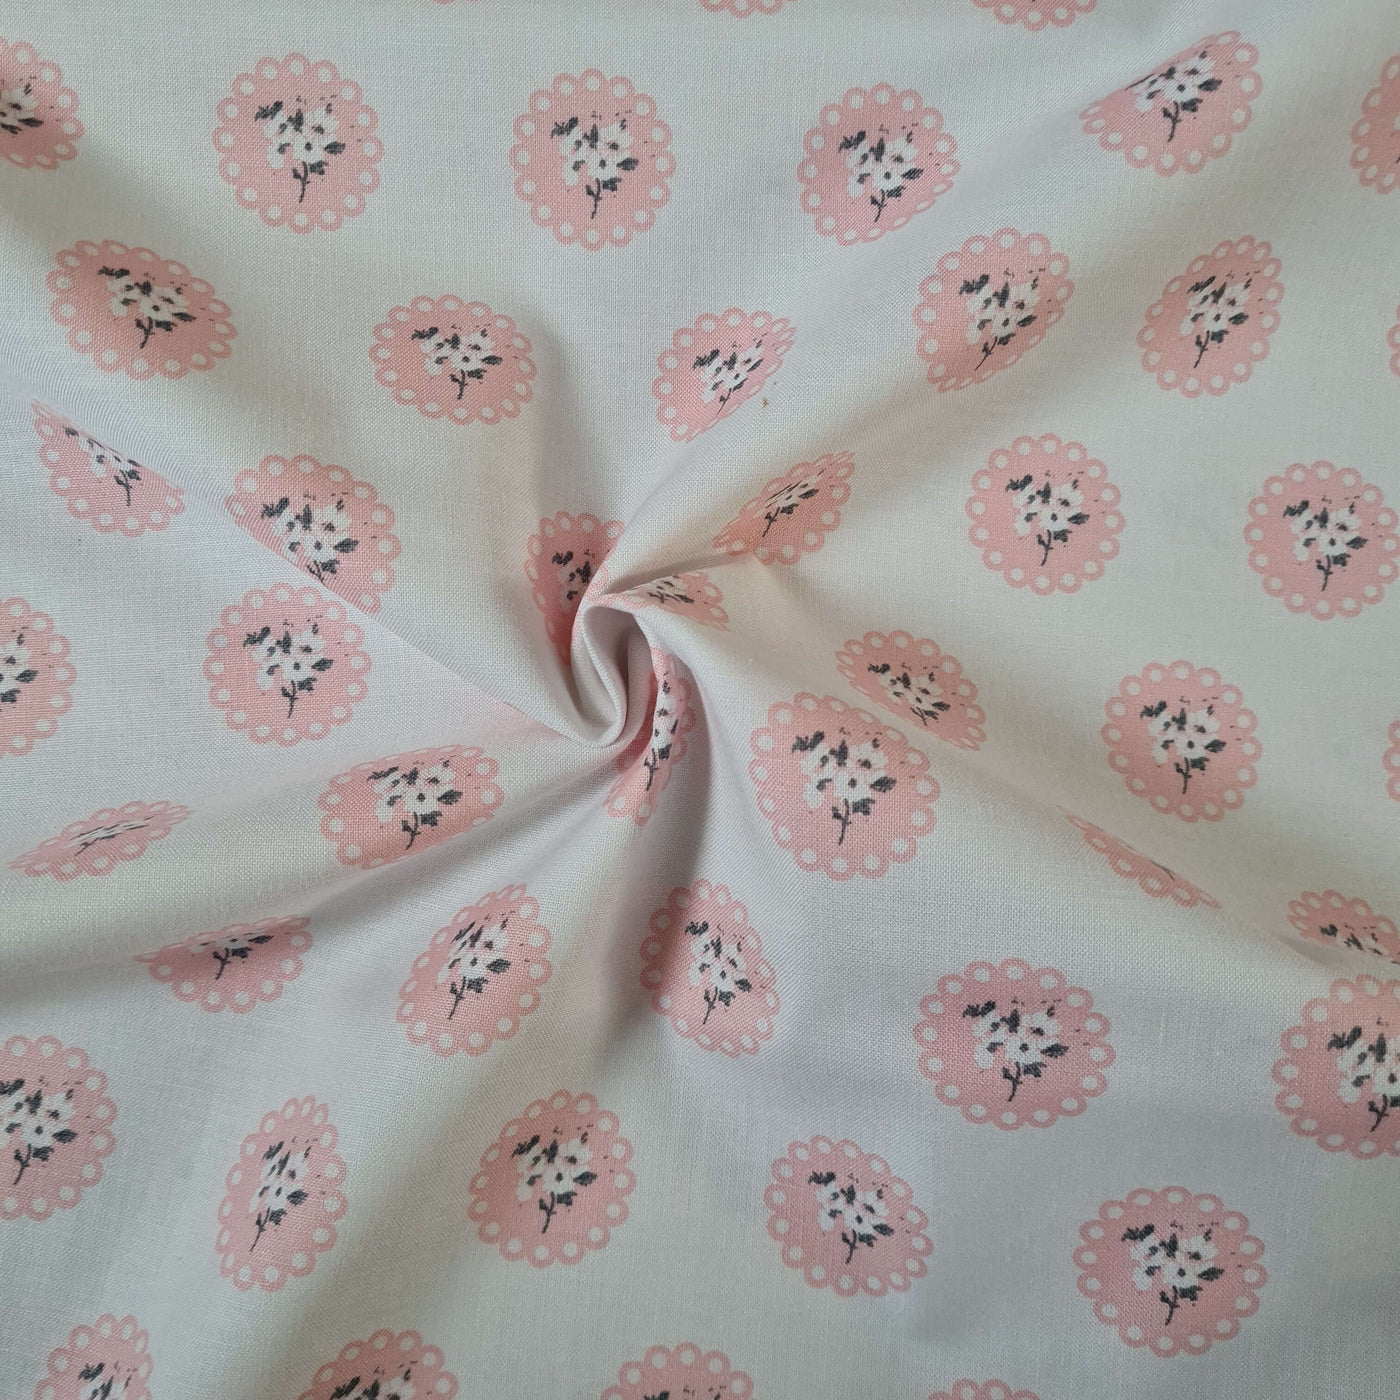 White Doily: Abbie's Garden cotton floral quilting fabrics. Riley Blake.